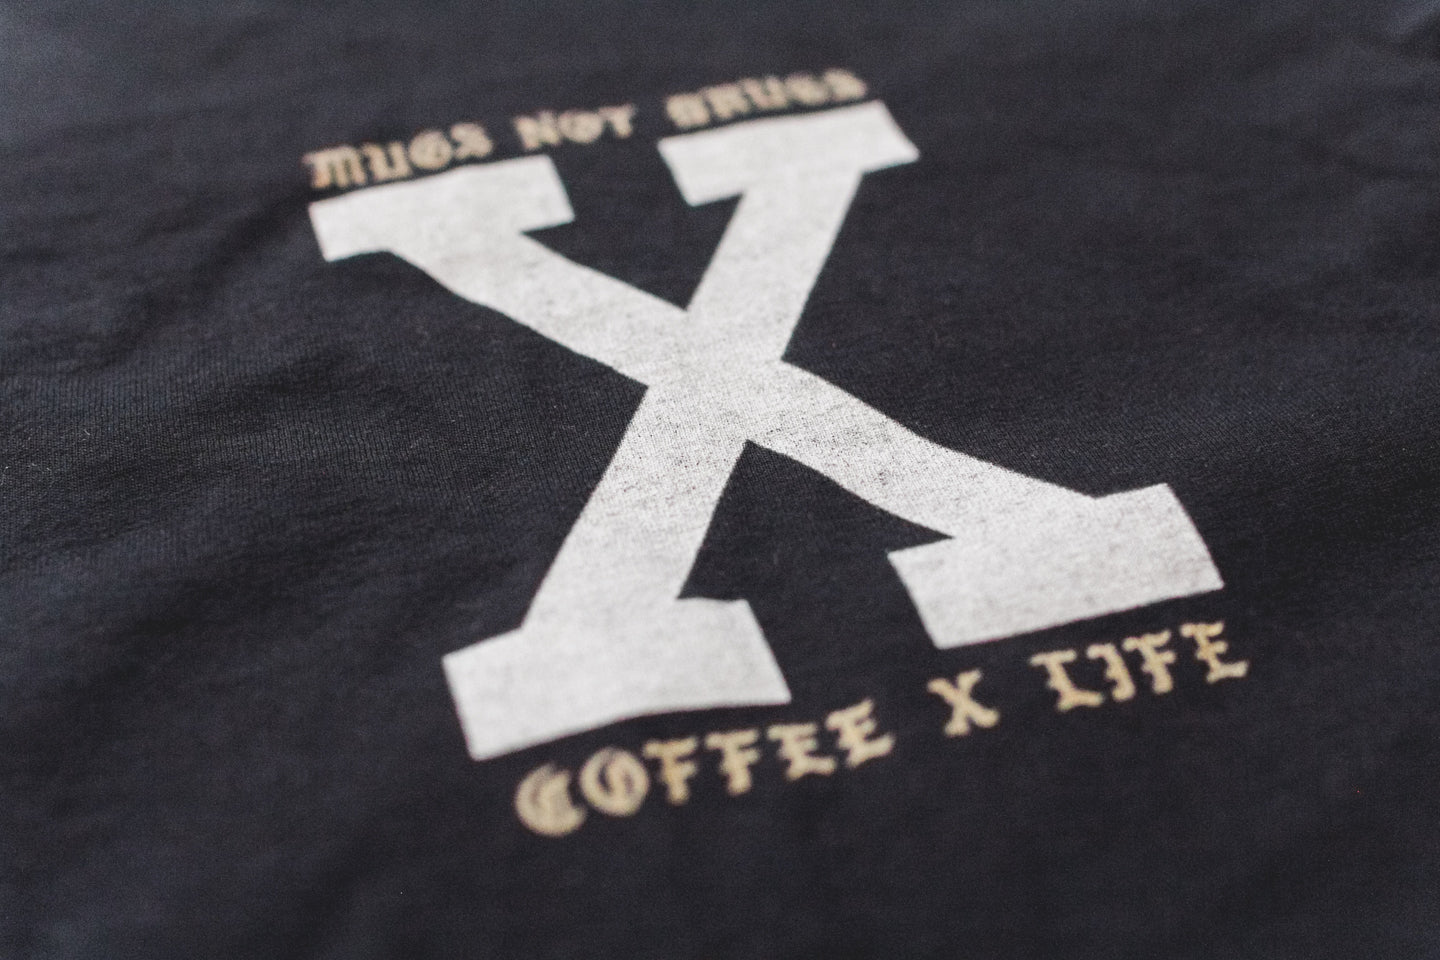 Coffee x Life black long sleeve tee tshirt by STRAIGHTEDGEWORLDWIDE